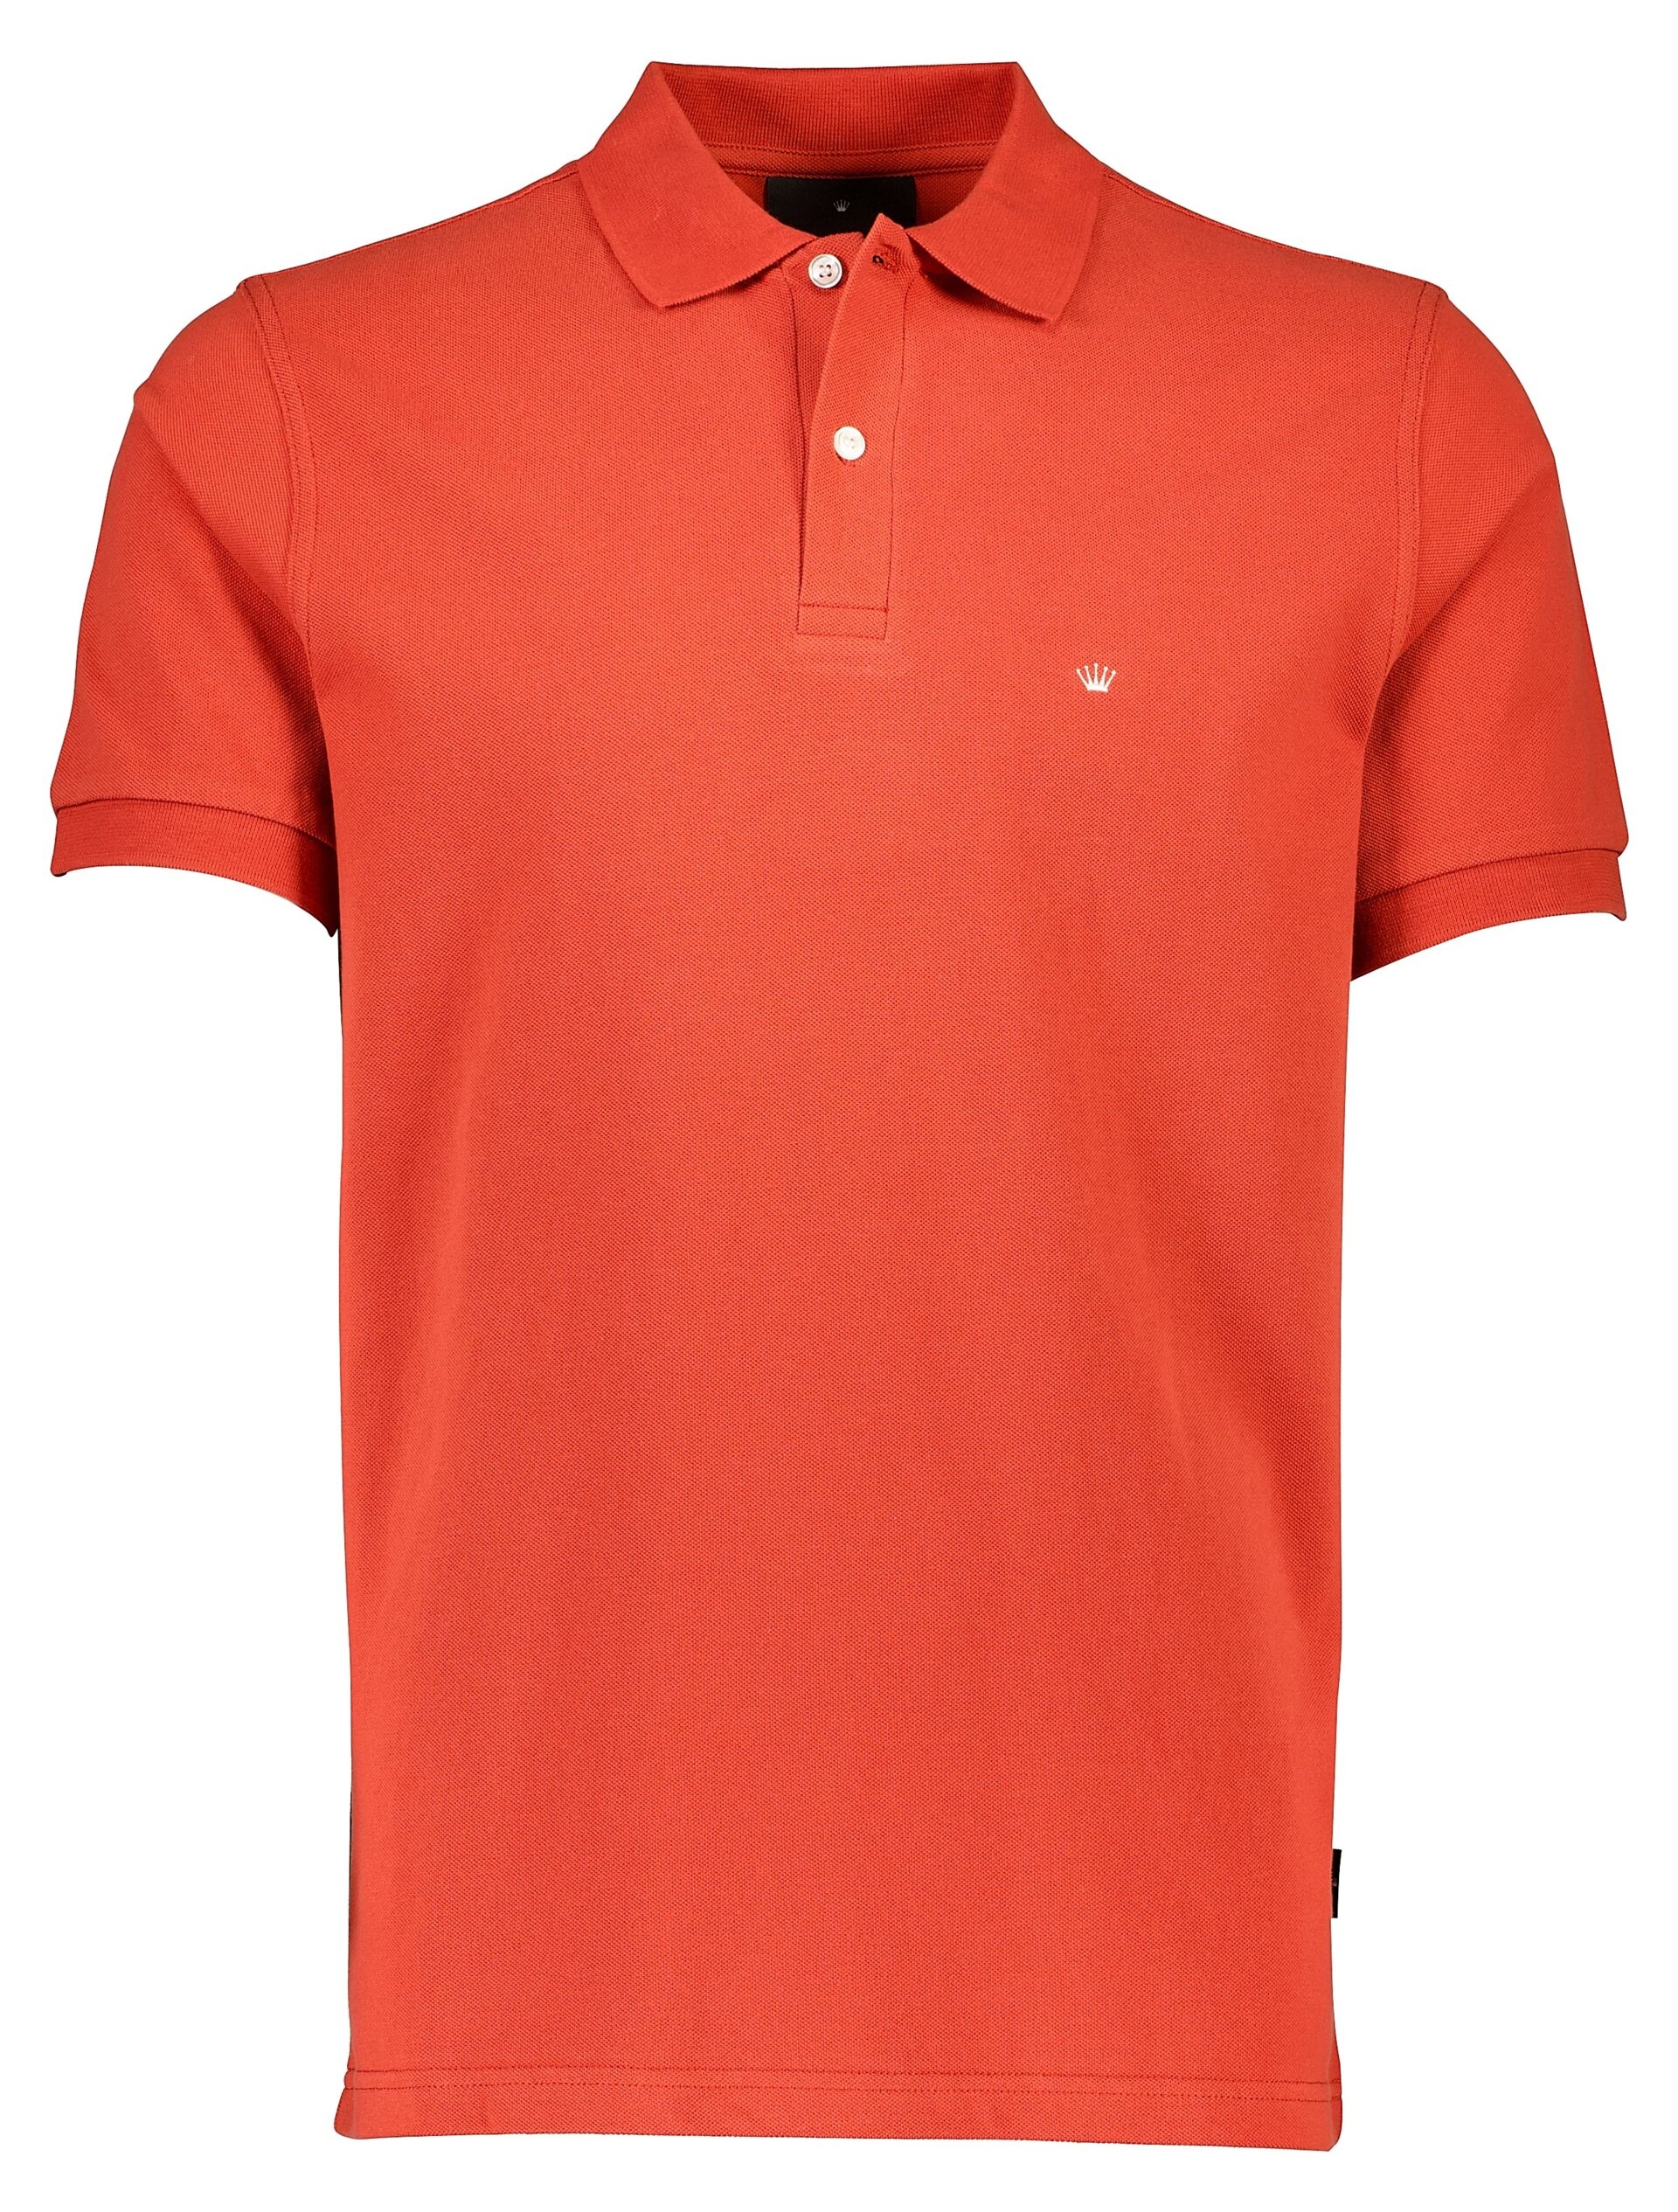 Junk de Luxe Polo shirt orange / dk burnt orange